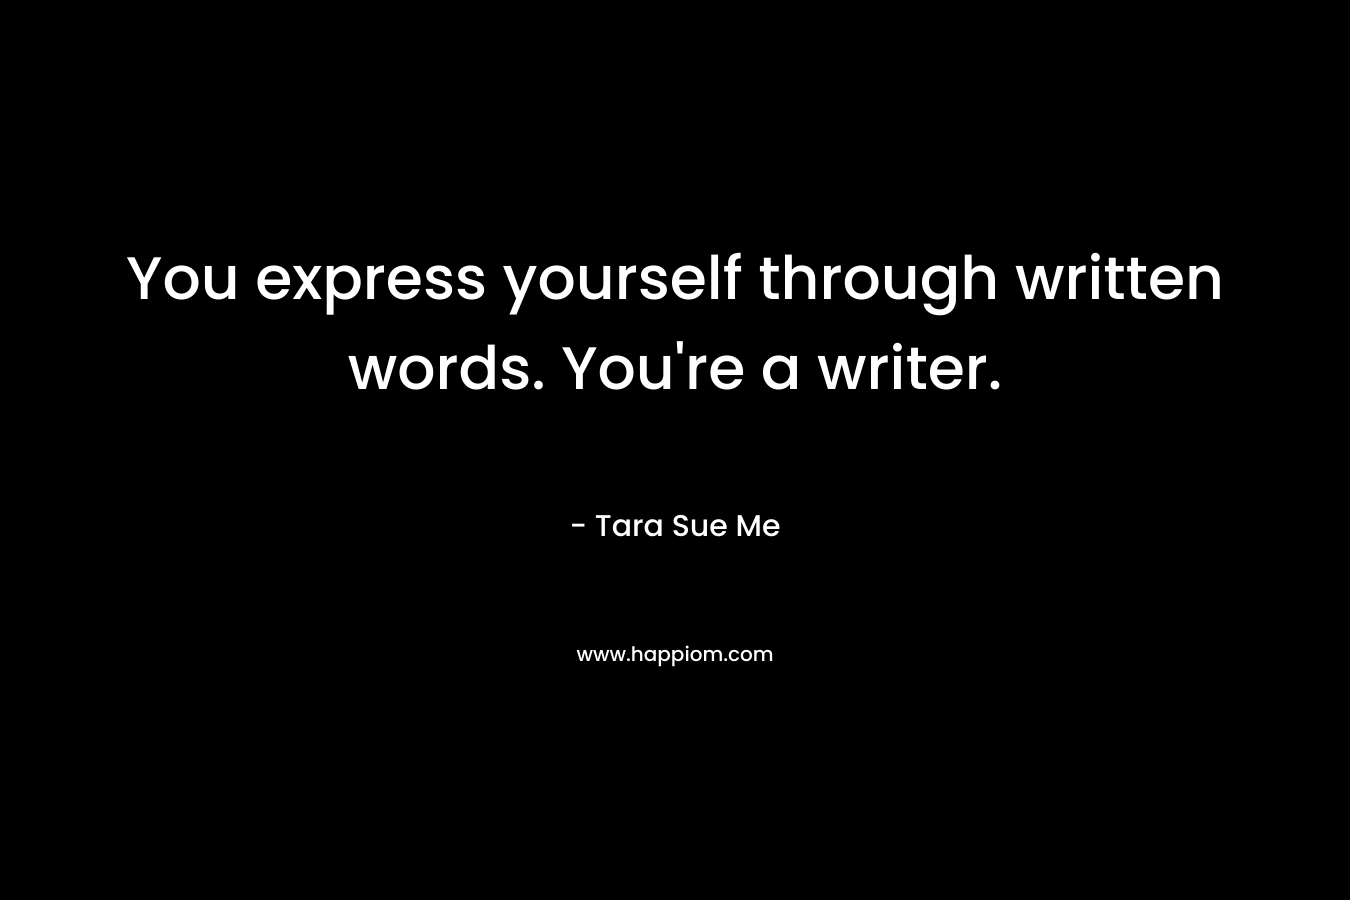 You express yourself through written words. You're a writer.